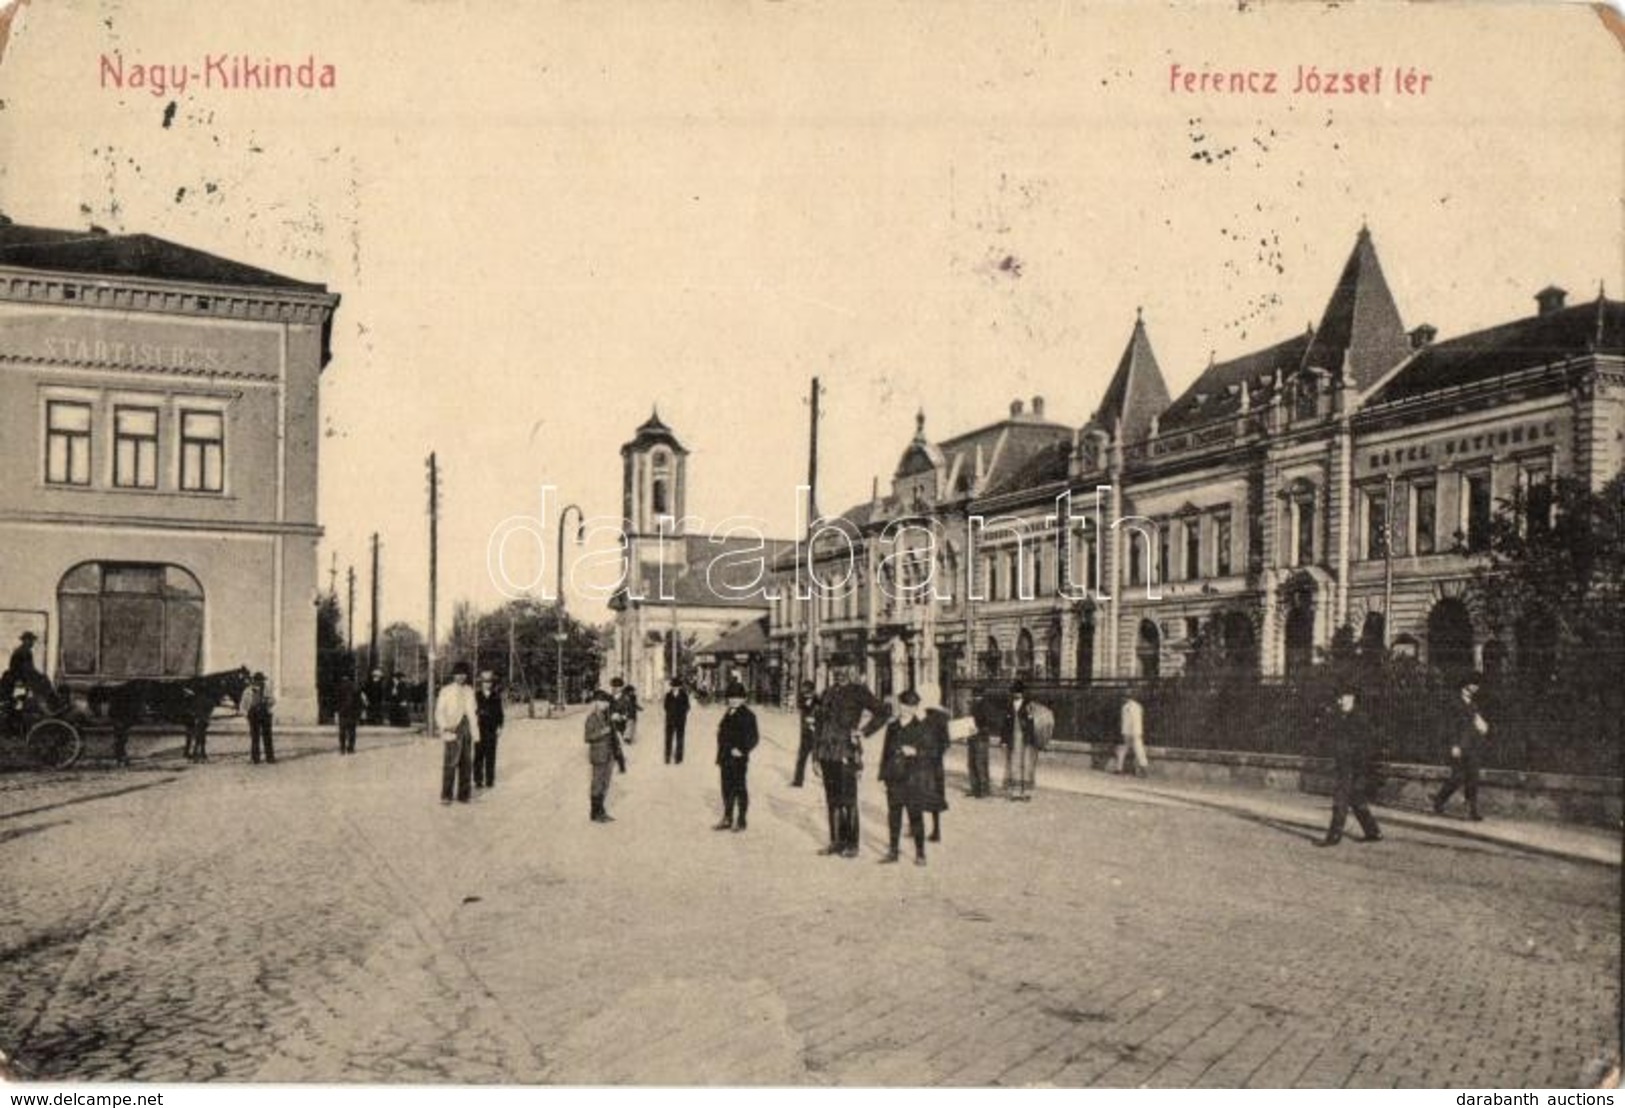 T3/T4 1908 Nagykikinda, Kikinda; Ferenc József Tér, Hotel National Szálloda, üzletek, Templom. W. L. 626. / Square, Hote - Unclassified